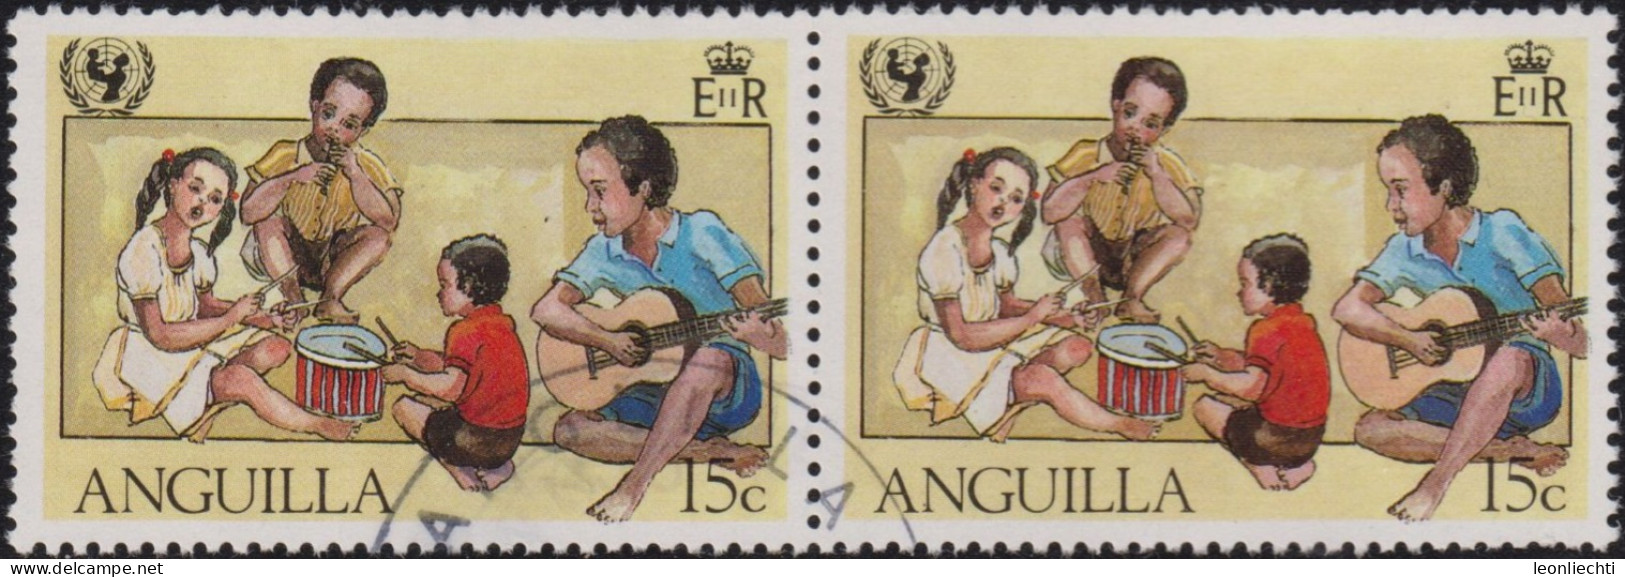 1981 Anguilla ° Mi:AI 448, Sn:AI 450, Yt:AI 414, Sg:AI 472, International Year Of The Child - UNICEF, 35th Anniversary - UNICEF